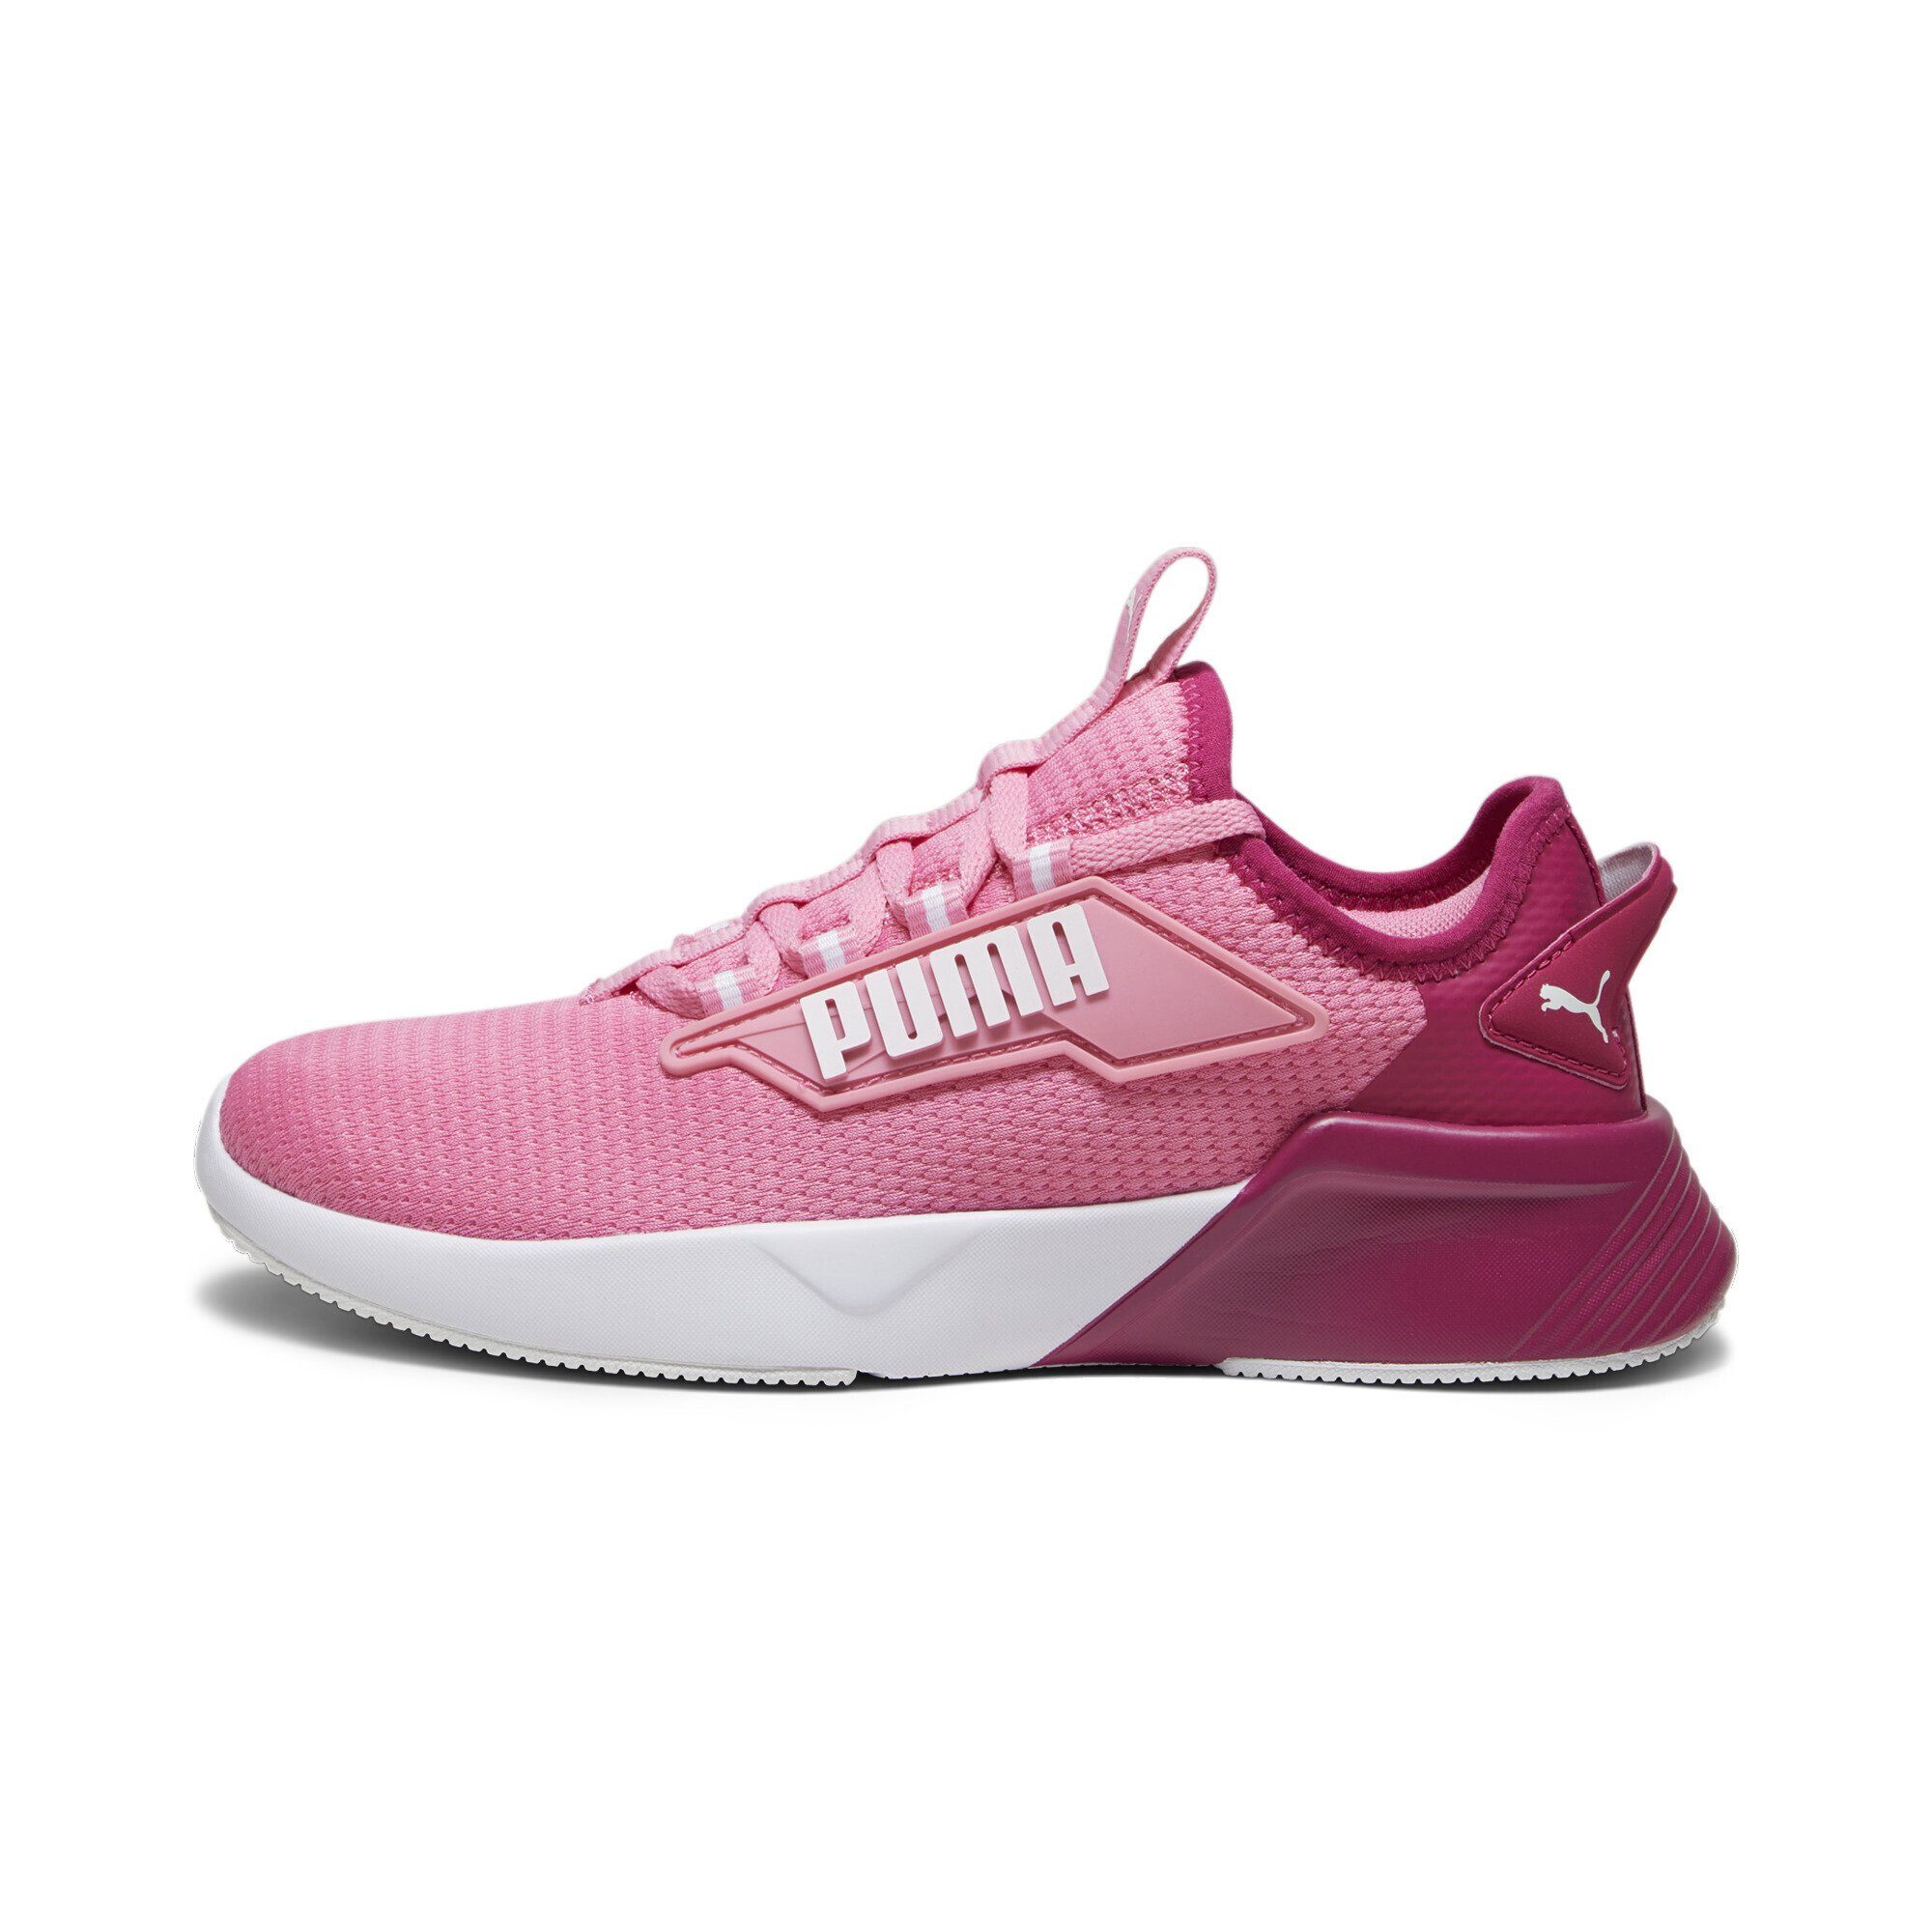 Jugendliche White 2 Sneakers Laufschuh Strawberry Pink Retaliate PUMA Pinktastic Burst